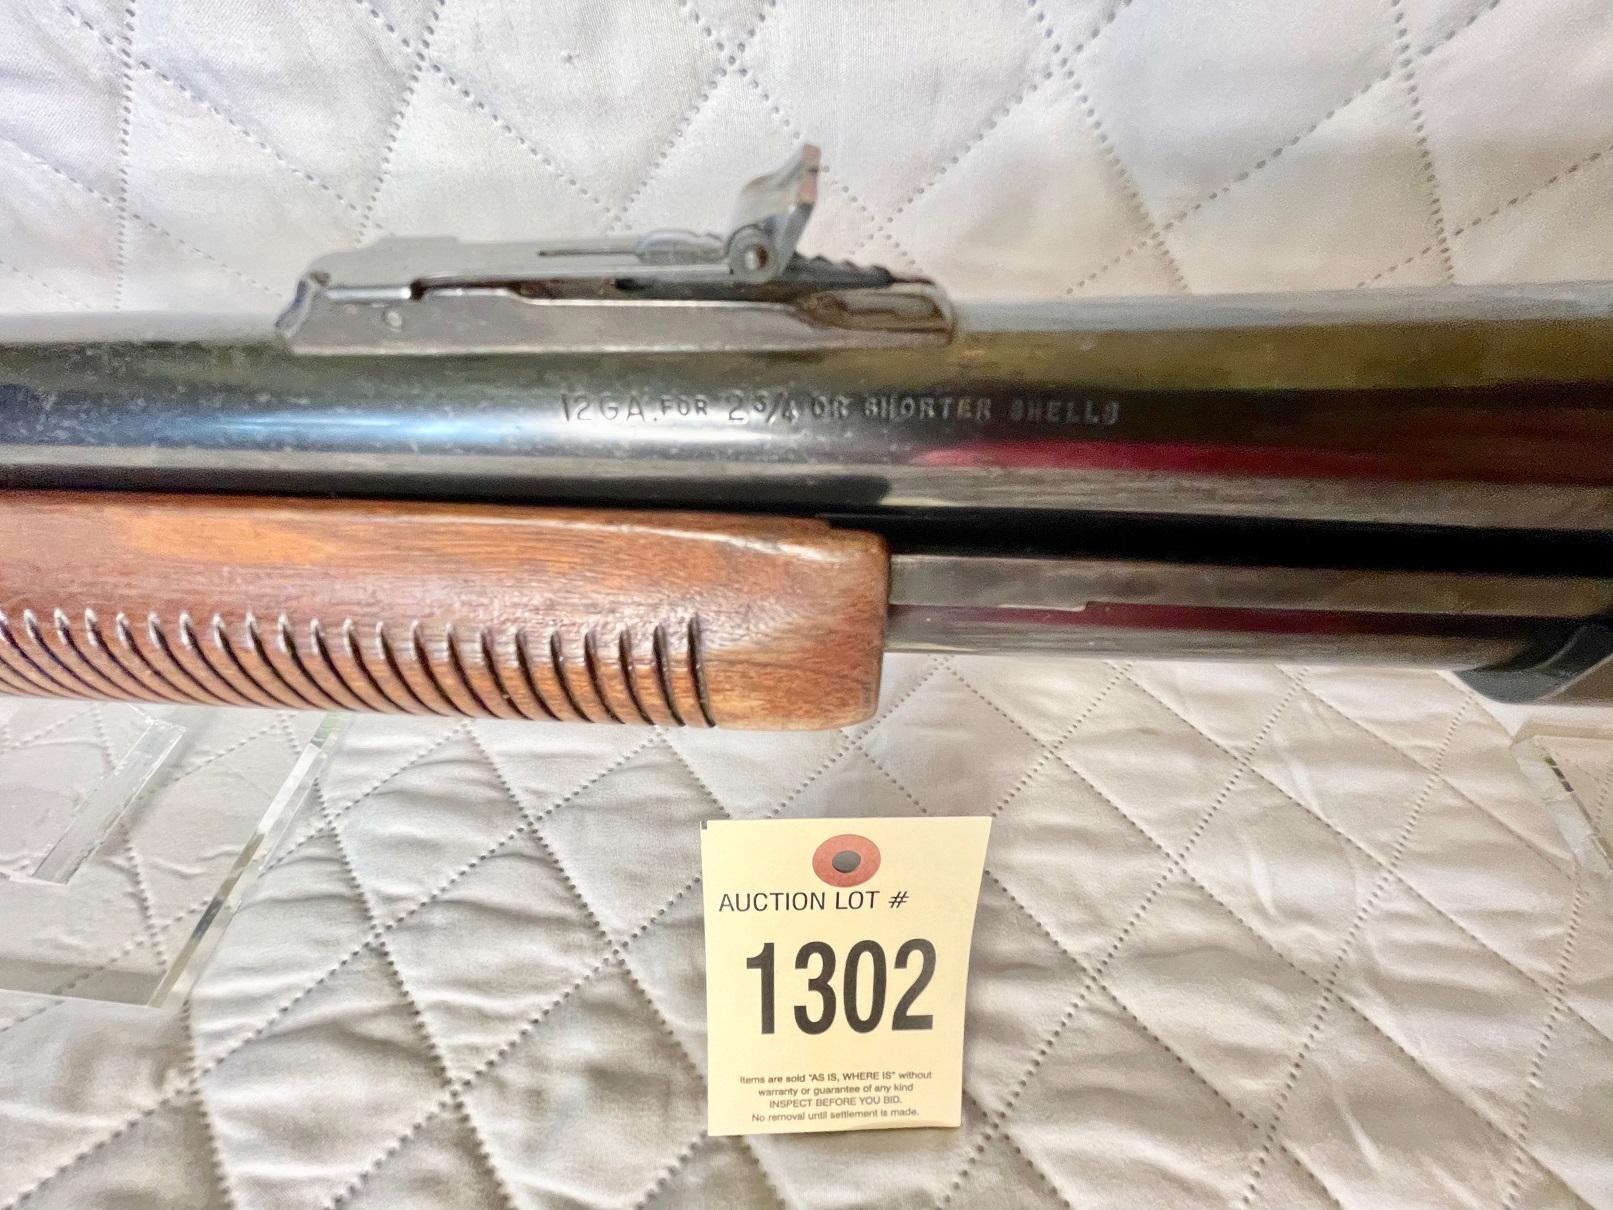 Remington Model 870 Shotgun